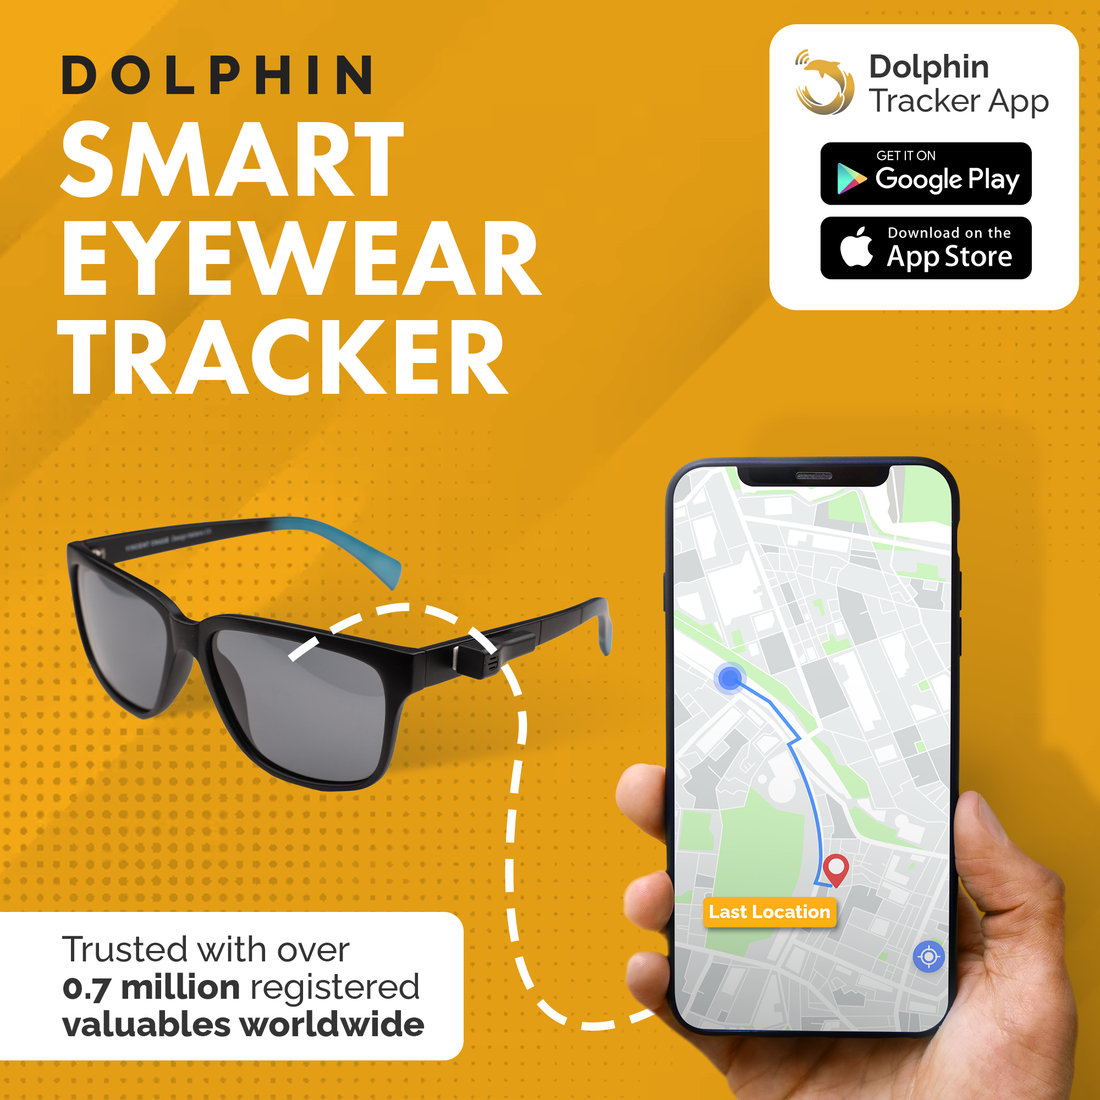 tag8-dolphin-eyewear-tracker-with-app